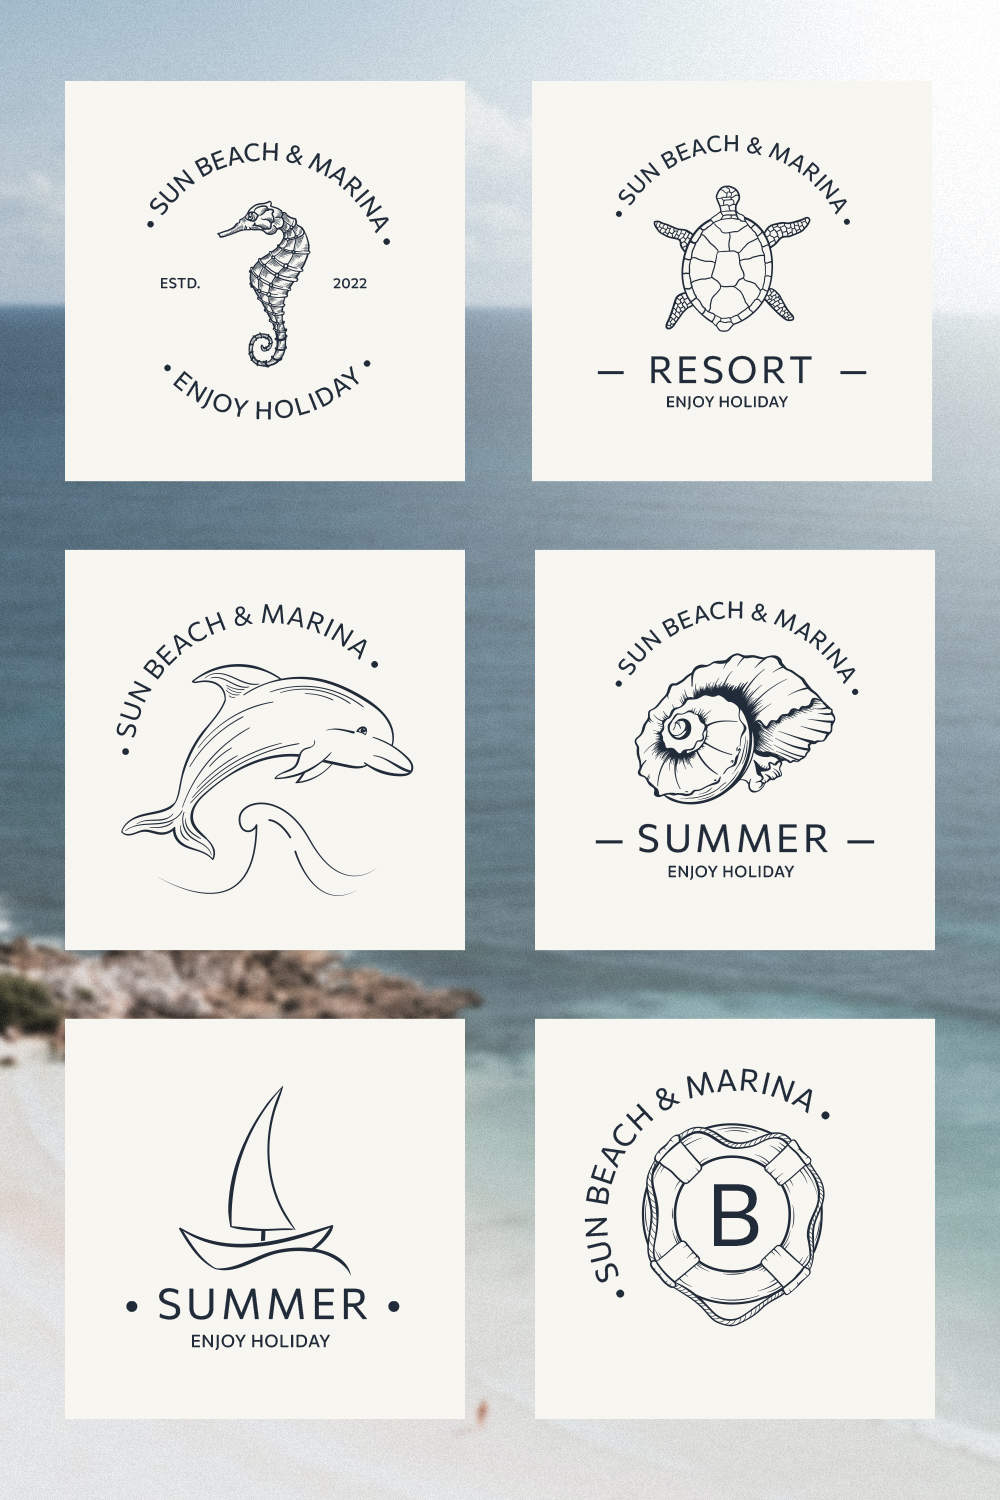 Cool outline beach logos.